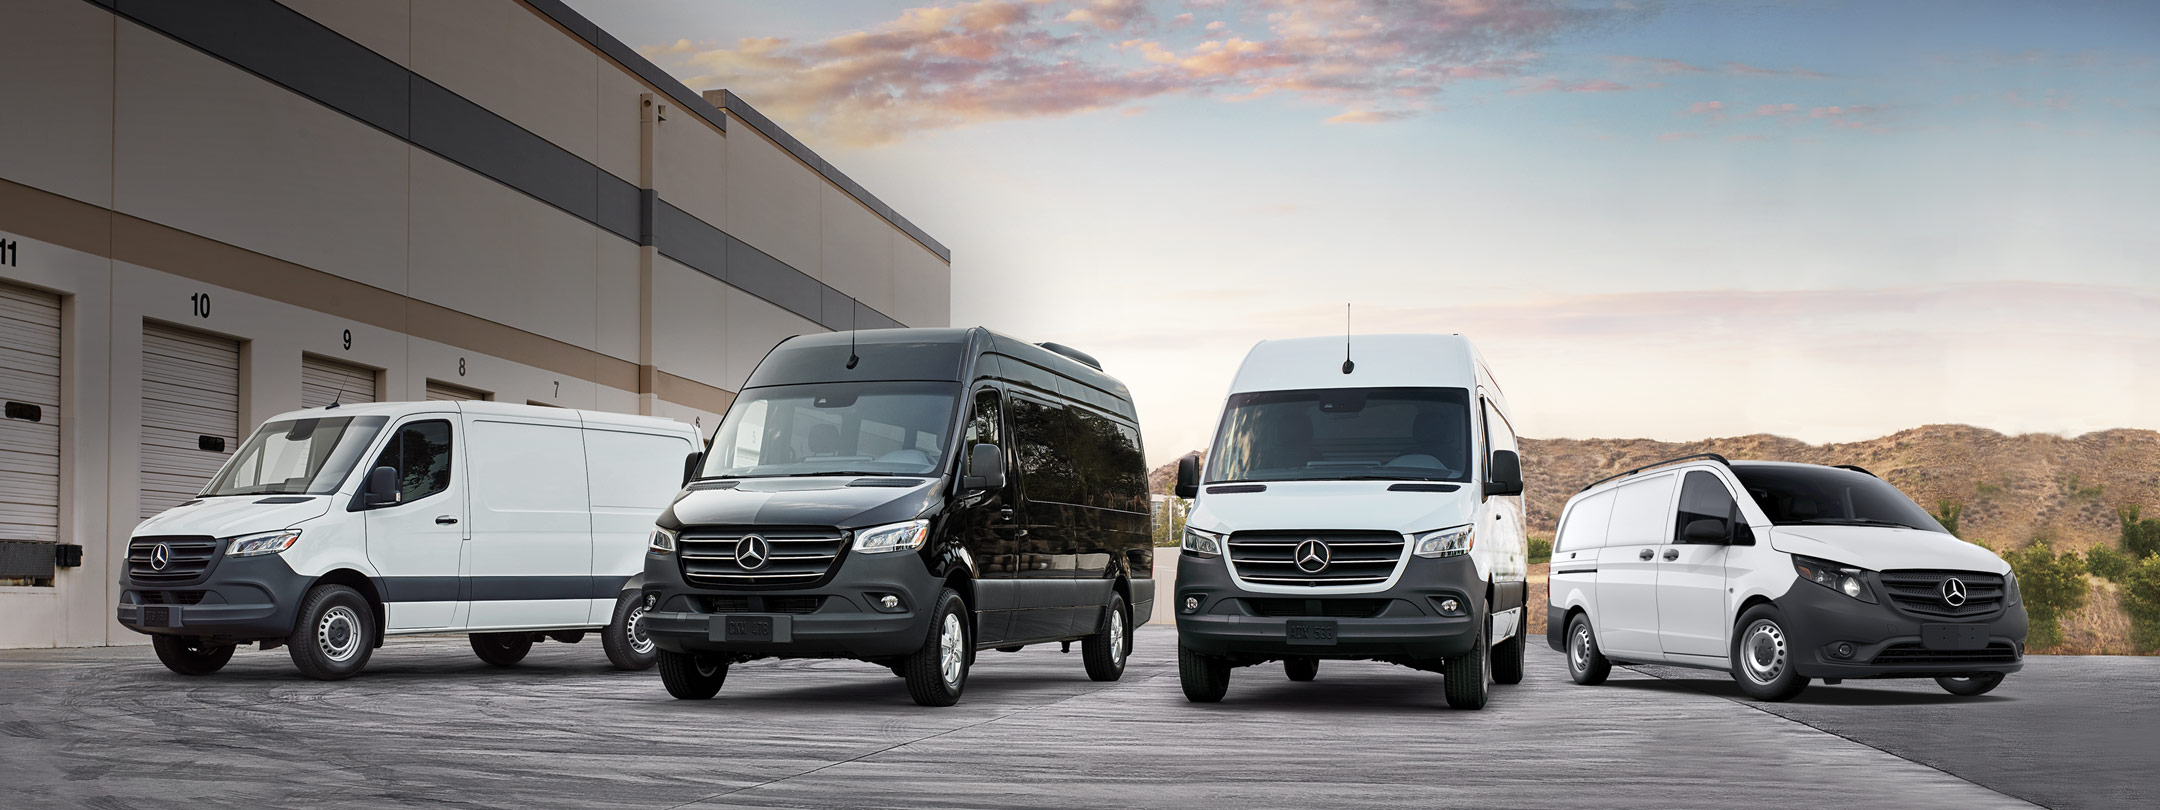 Sprinter And Metris Financial Services Mercedes Benz Vans